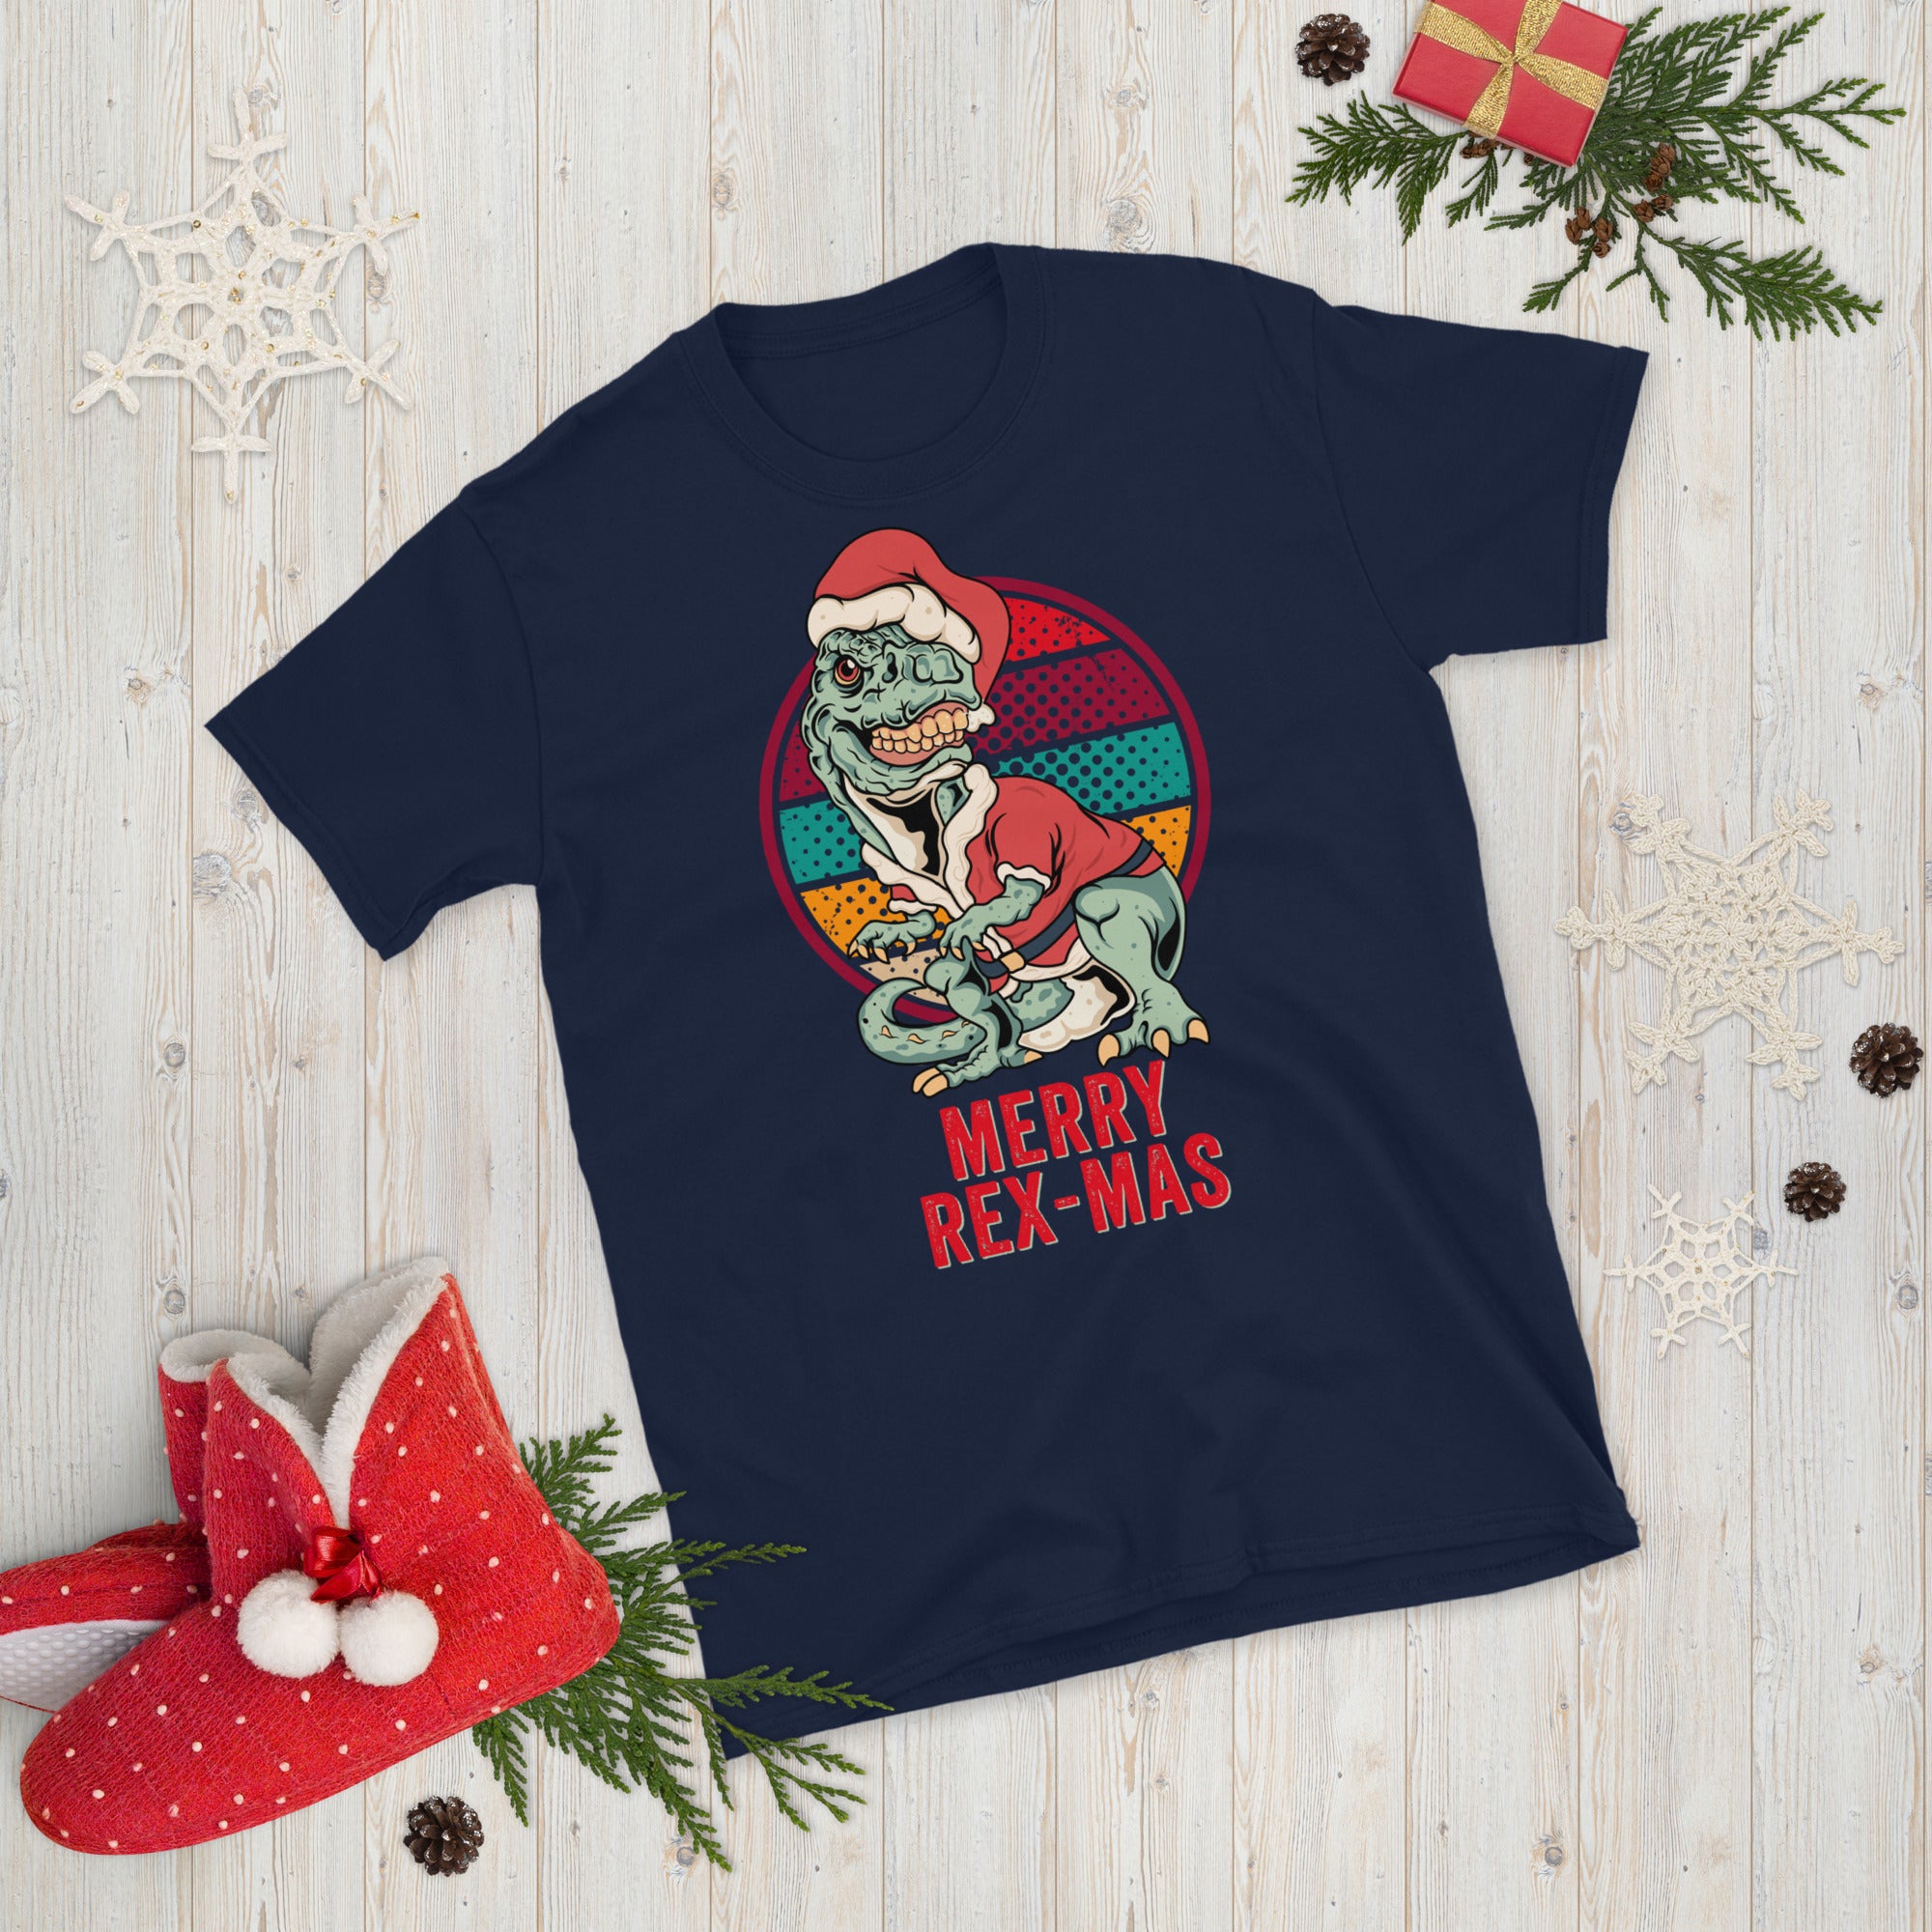 Merry Rexmas Shirt, T Rex Christmas Shirt, Dinosaur Christmas Shirt, Santasaurus shirt, Christmasaurus Rex, Xmas Dino Shirt, Santa Dino Tee